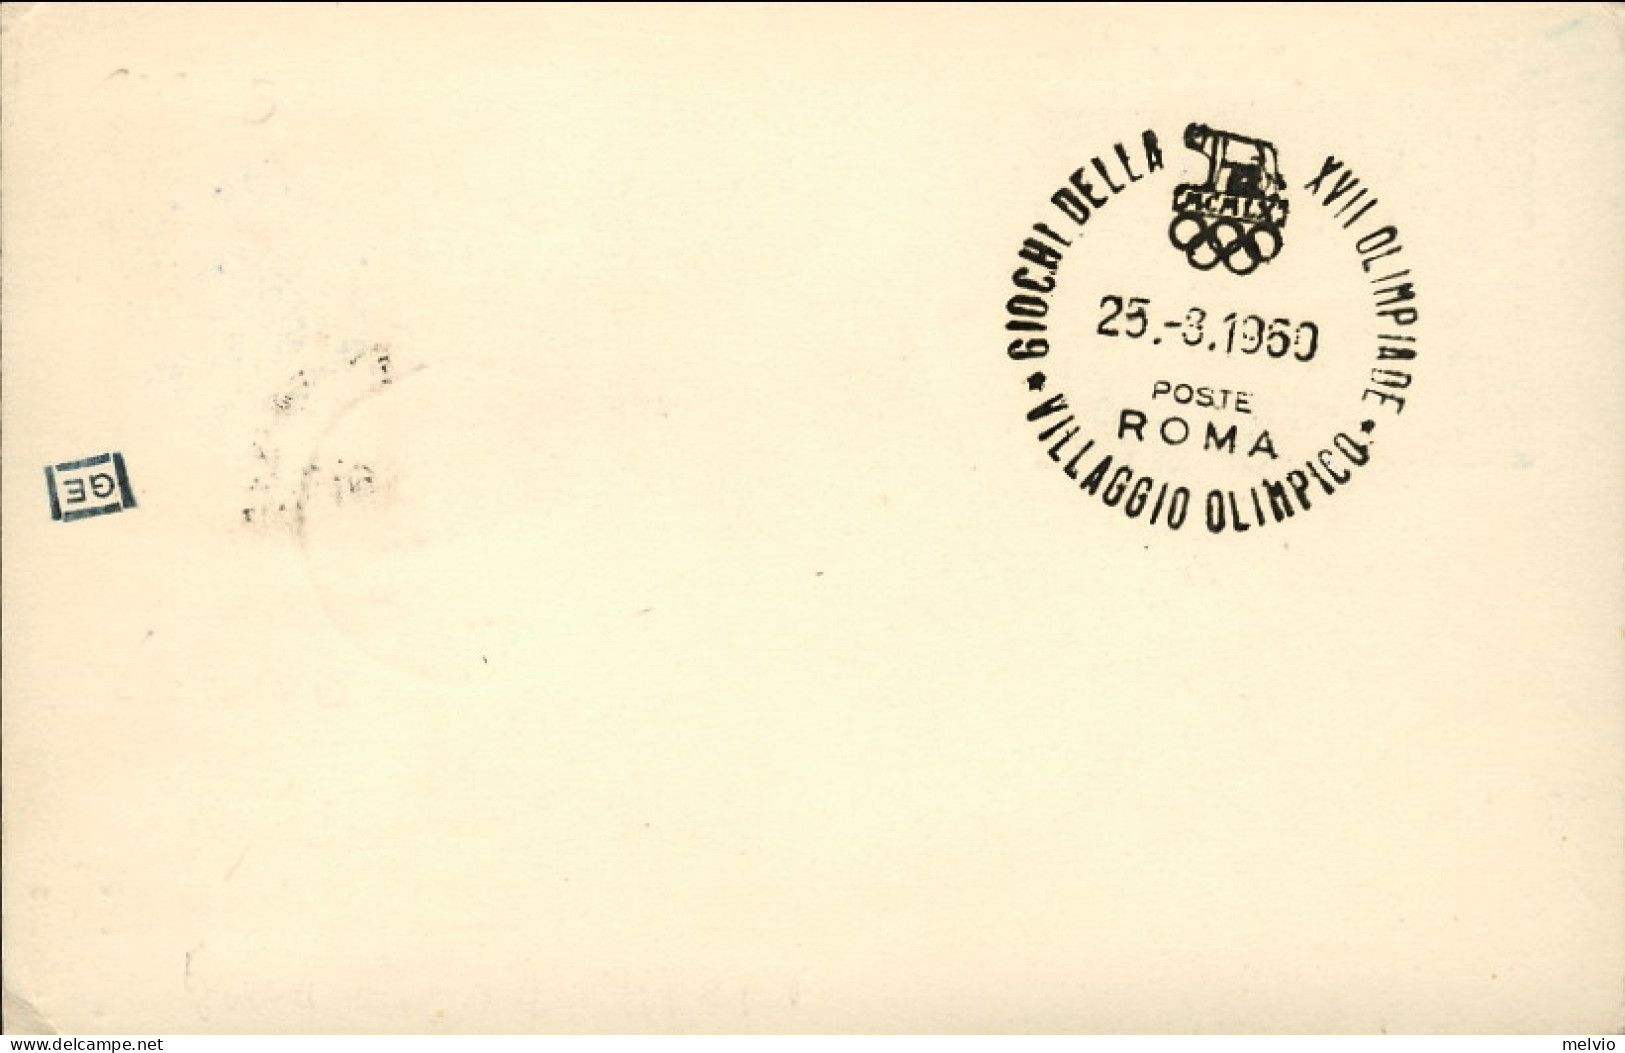 1960-Belgique Belgium Belgio Cartolina Volo Olimpico Monaco Roma Del 25 Agosto - Covers & Documents